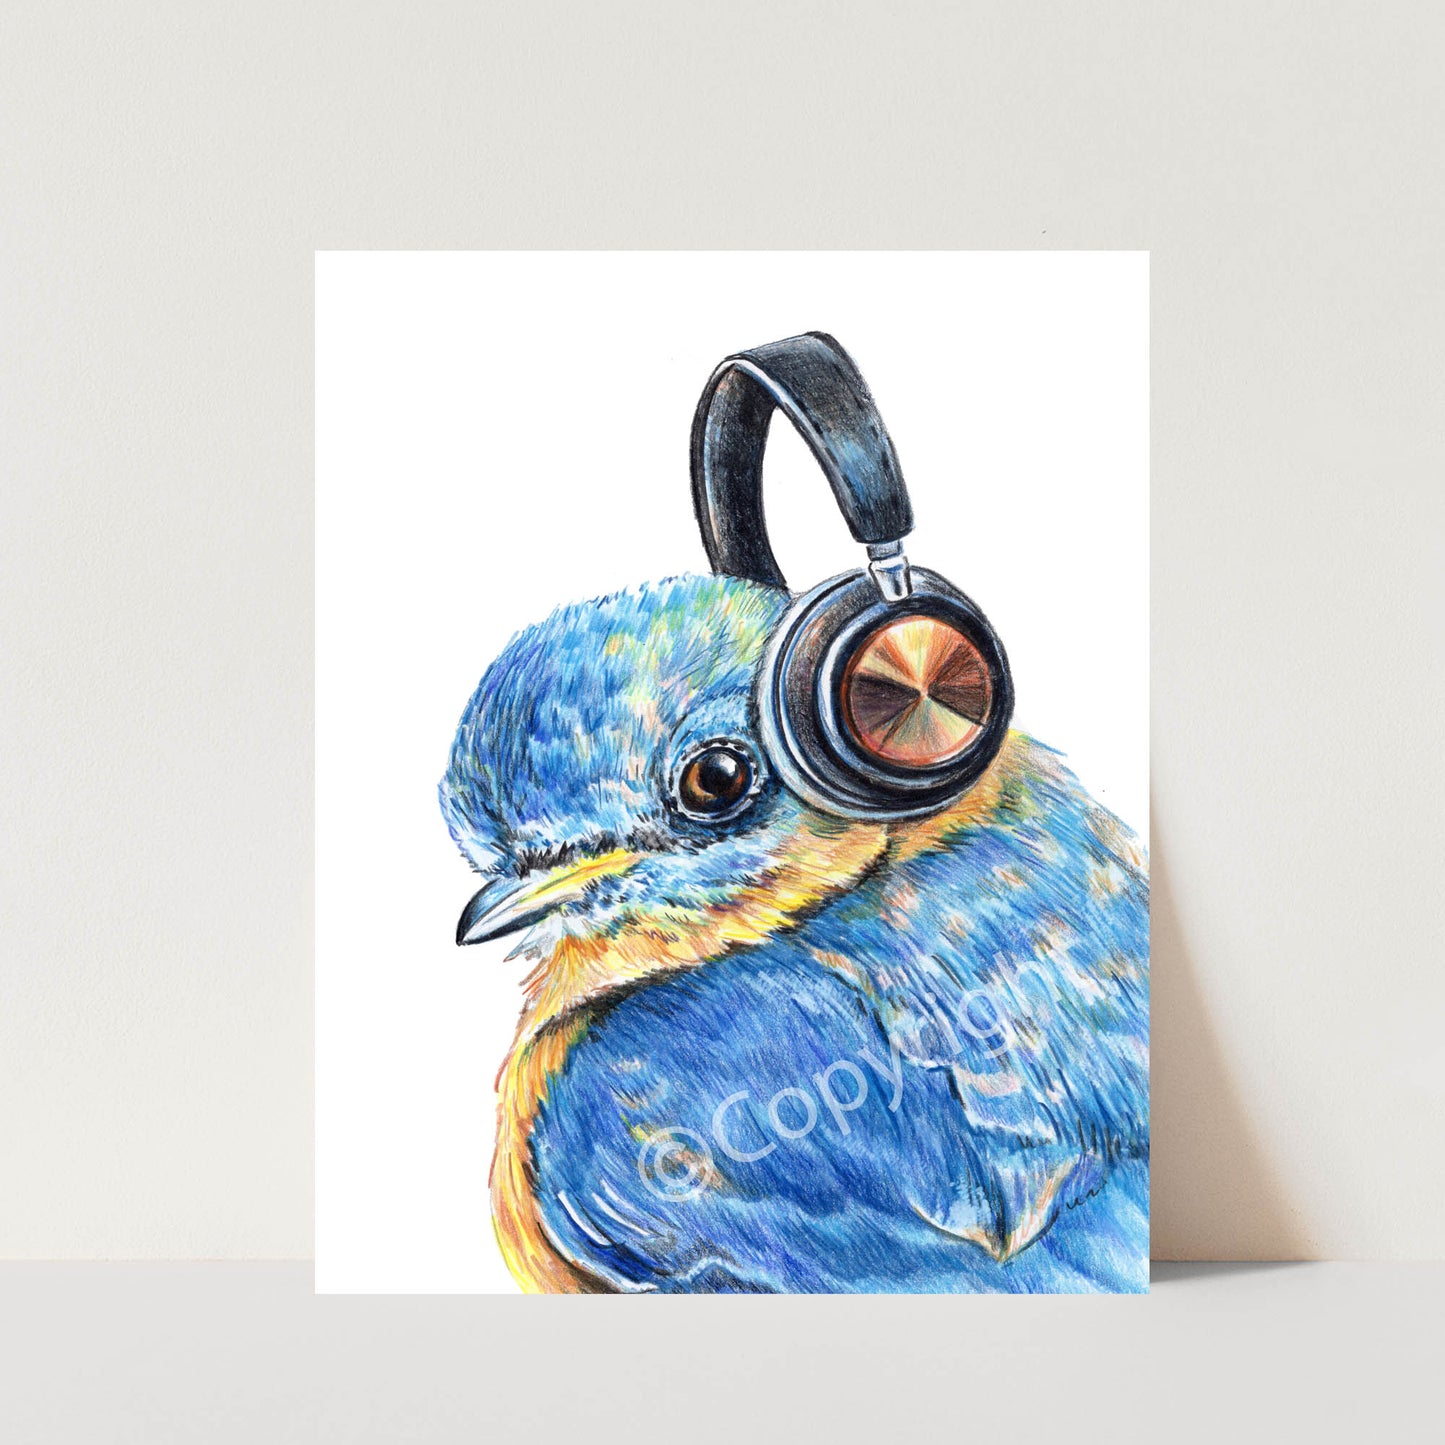 Crayon drawing of a bright blue bird wearing wireless headphone by Deidre Wicks